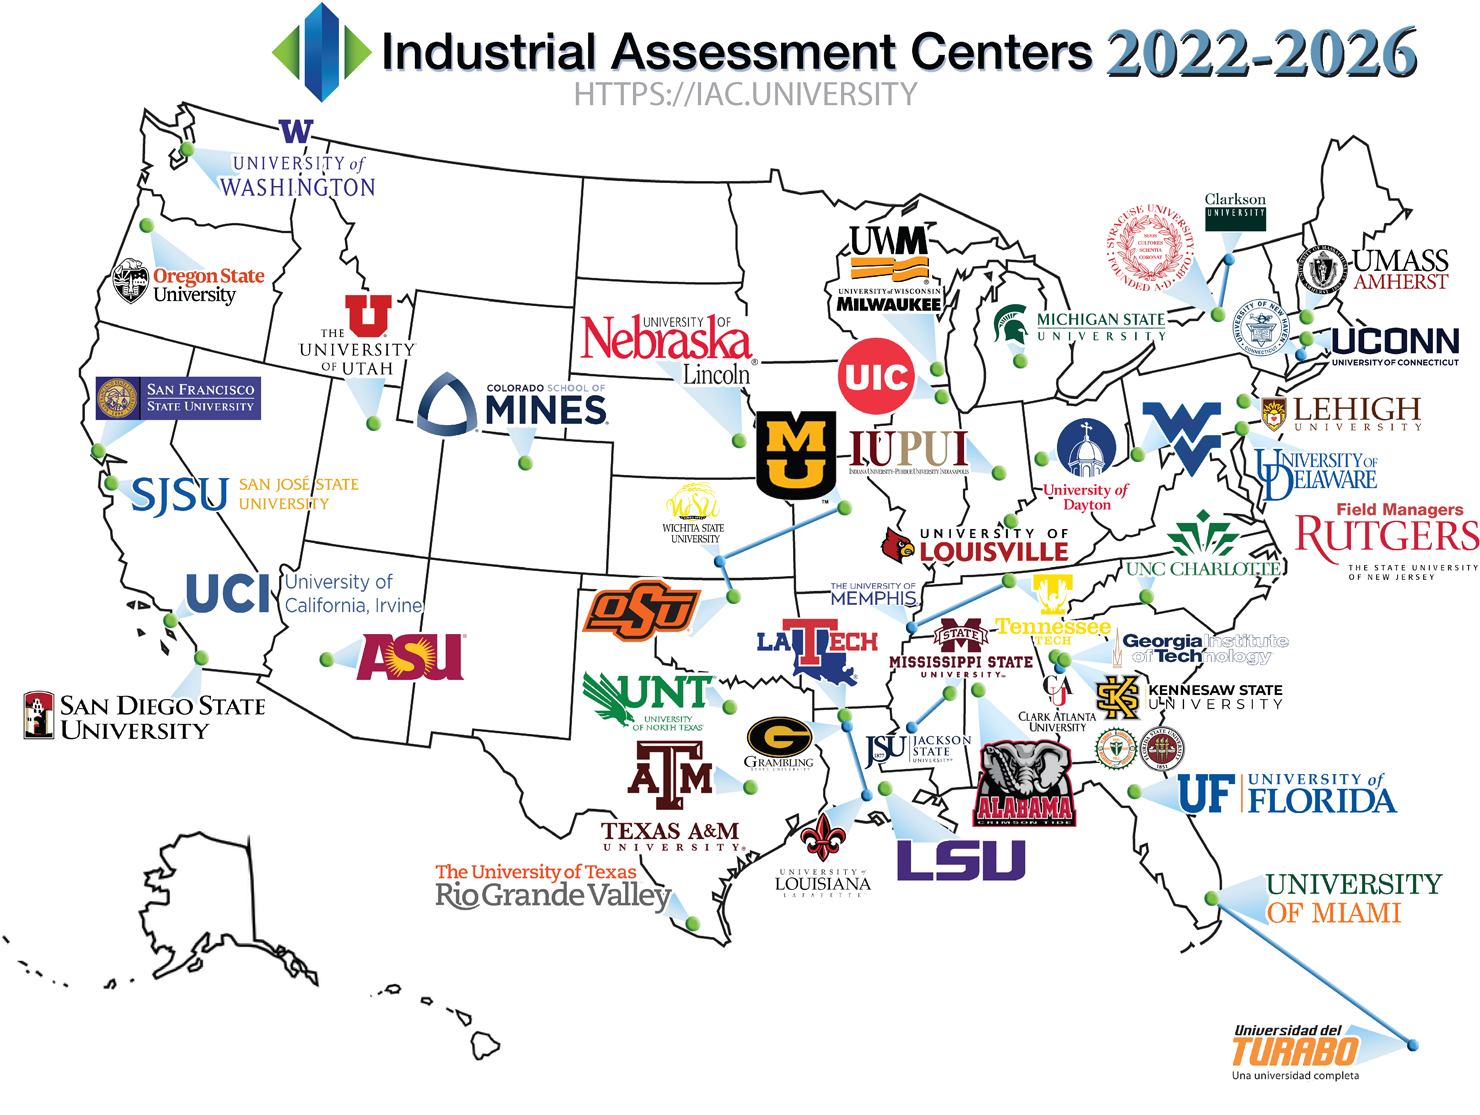 IAC Center Map